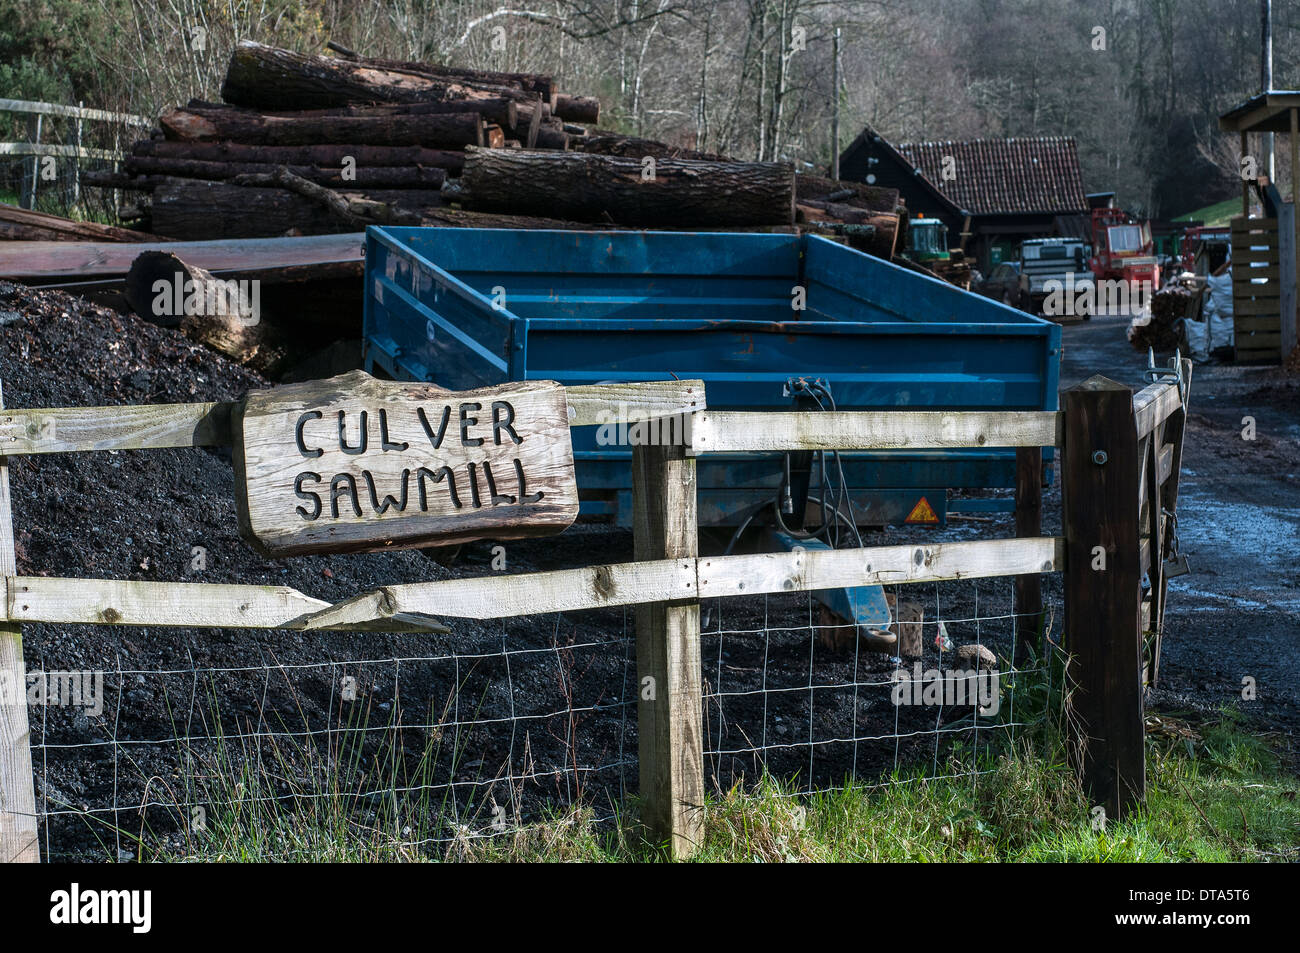 culver sawmills Stock Photo